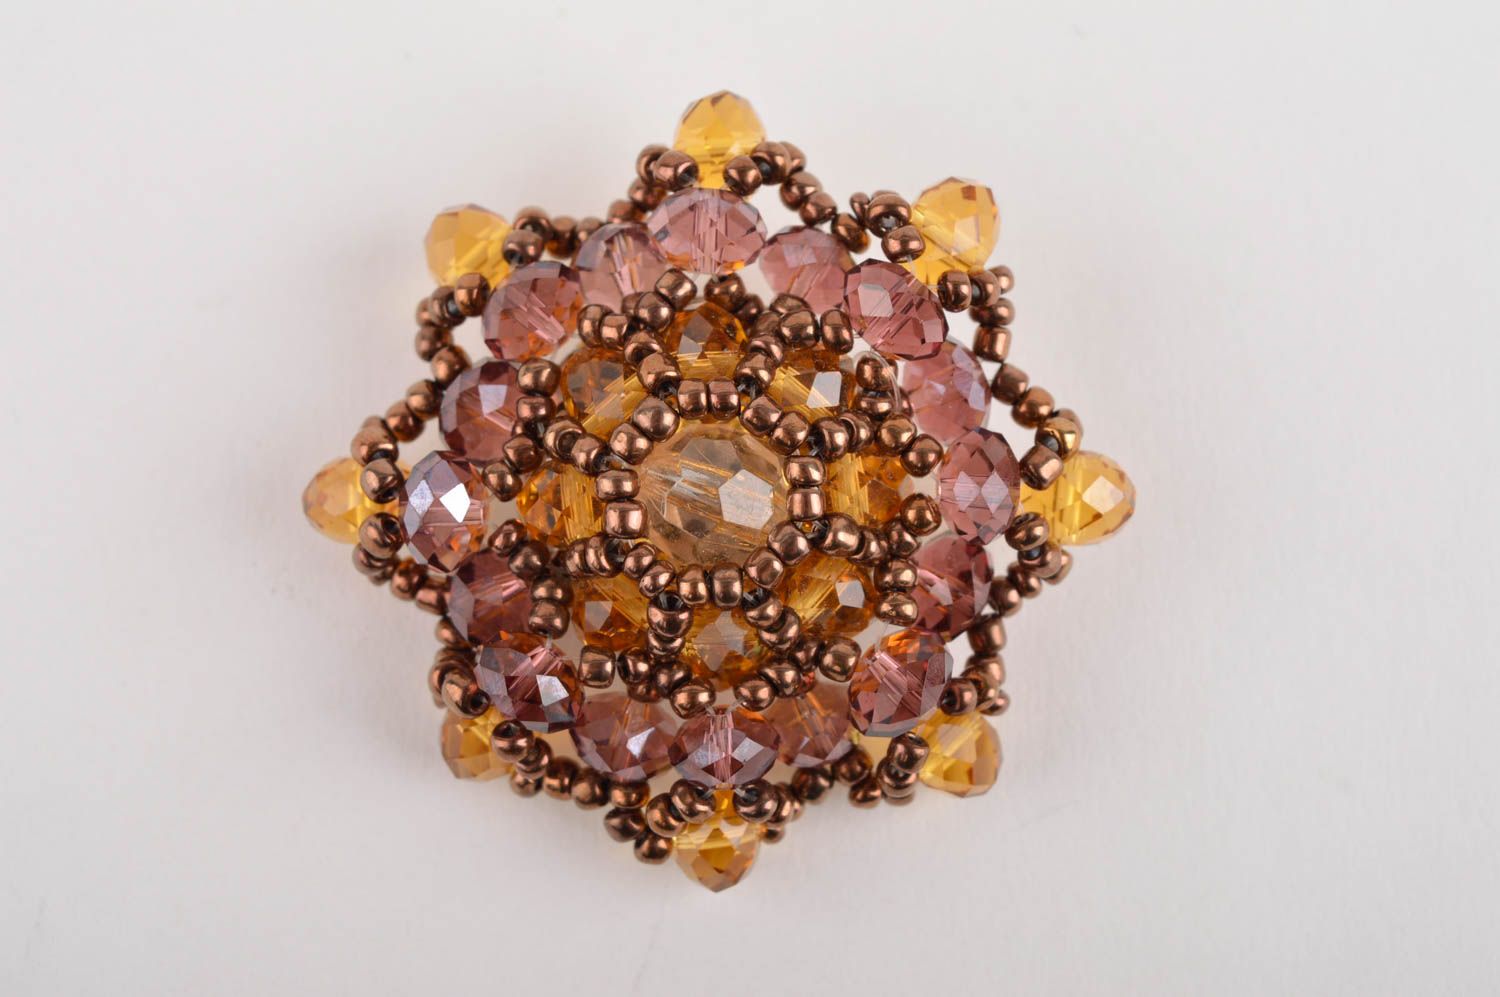 Stylish handmade beaded brooch jewelry artisan jewelry designs gifts for her photo 2